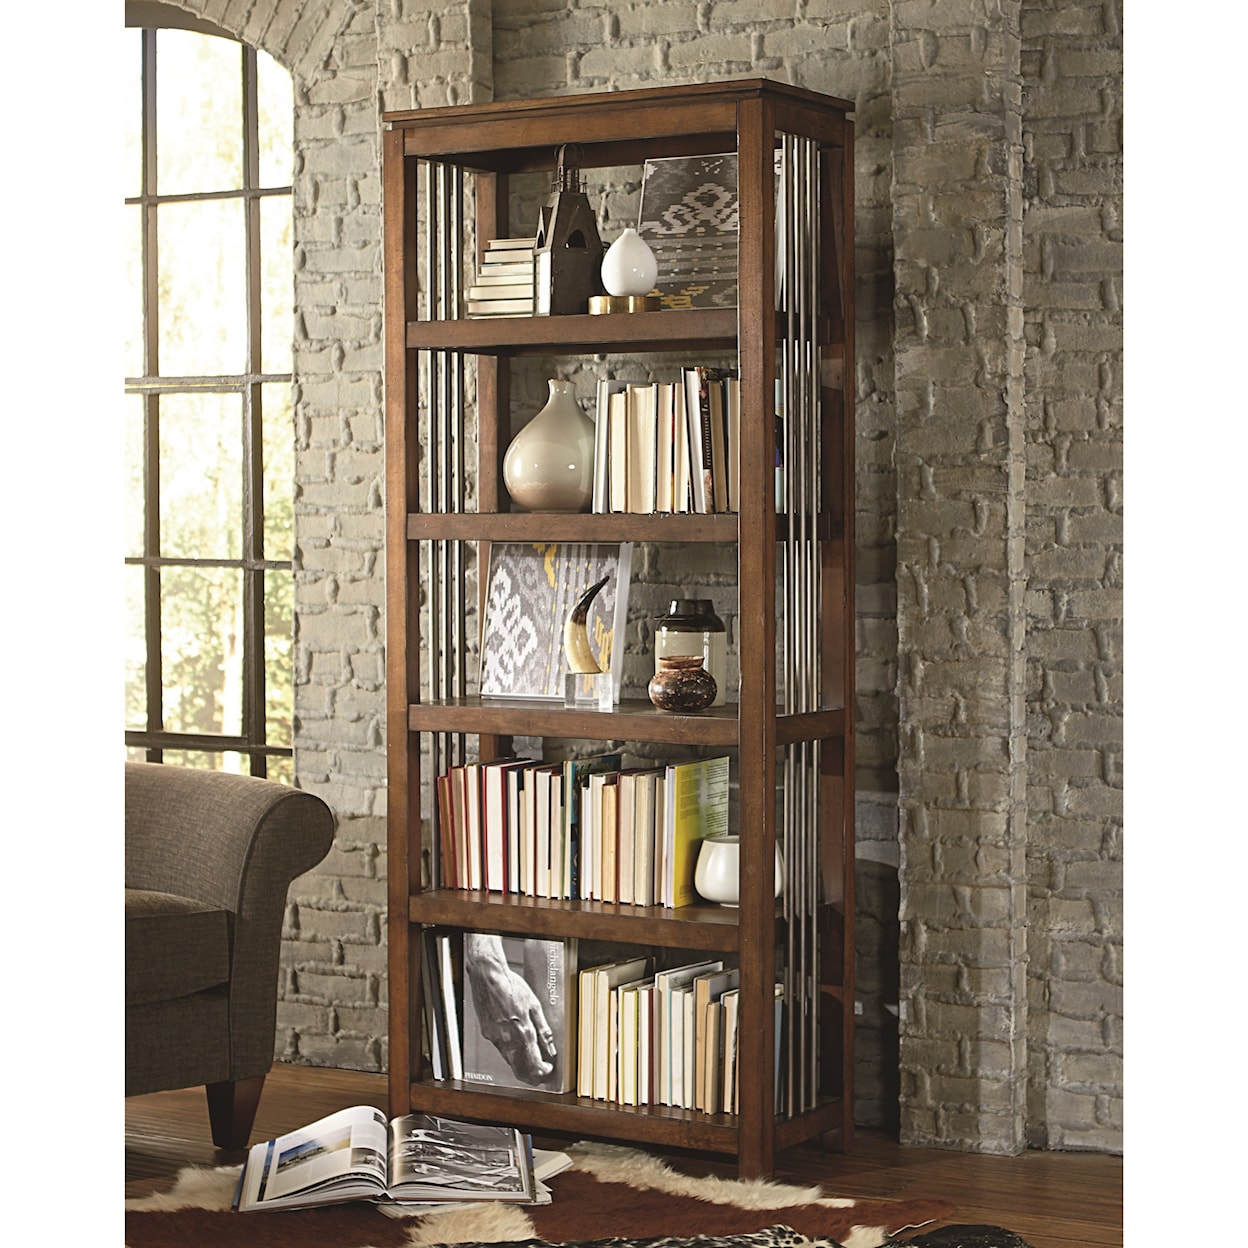 Hammary Hidden Treasures Bookcase with Five Shelves